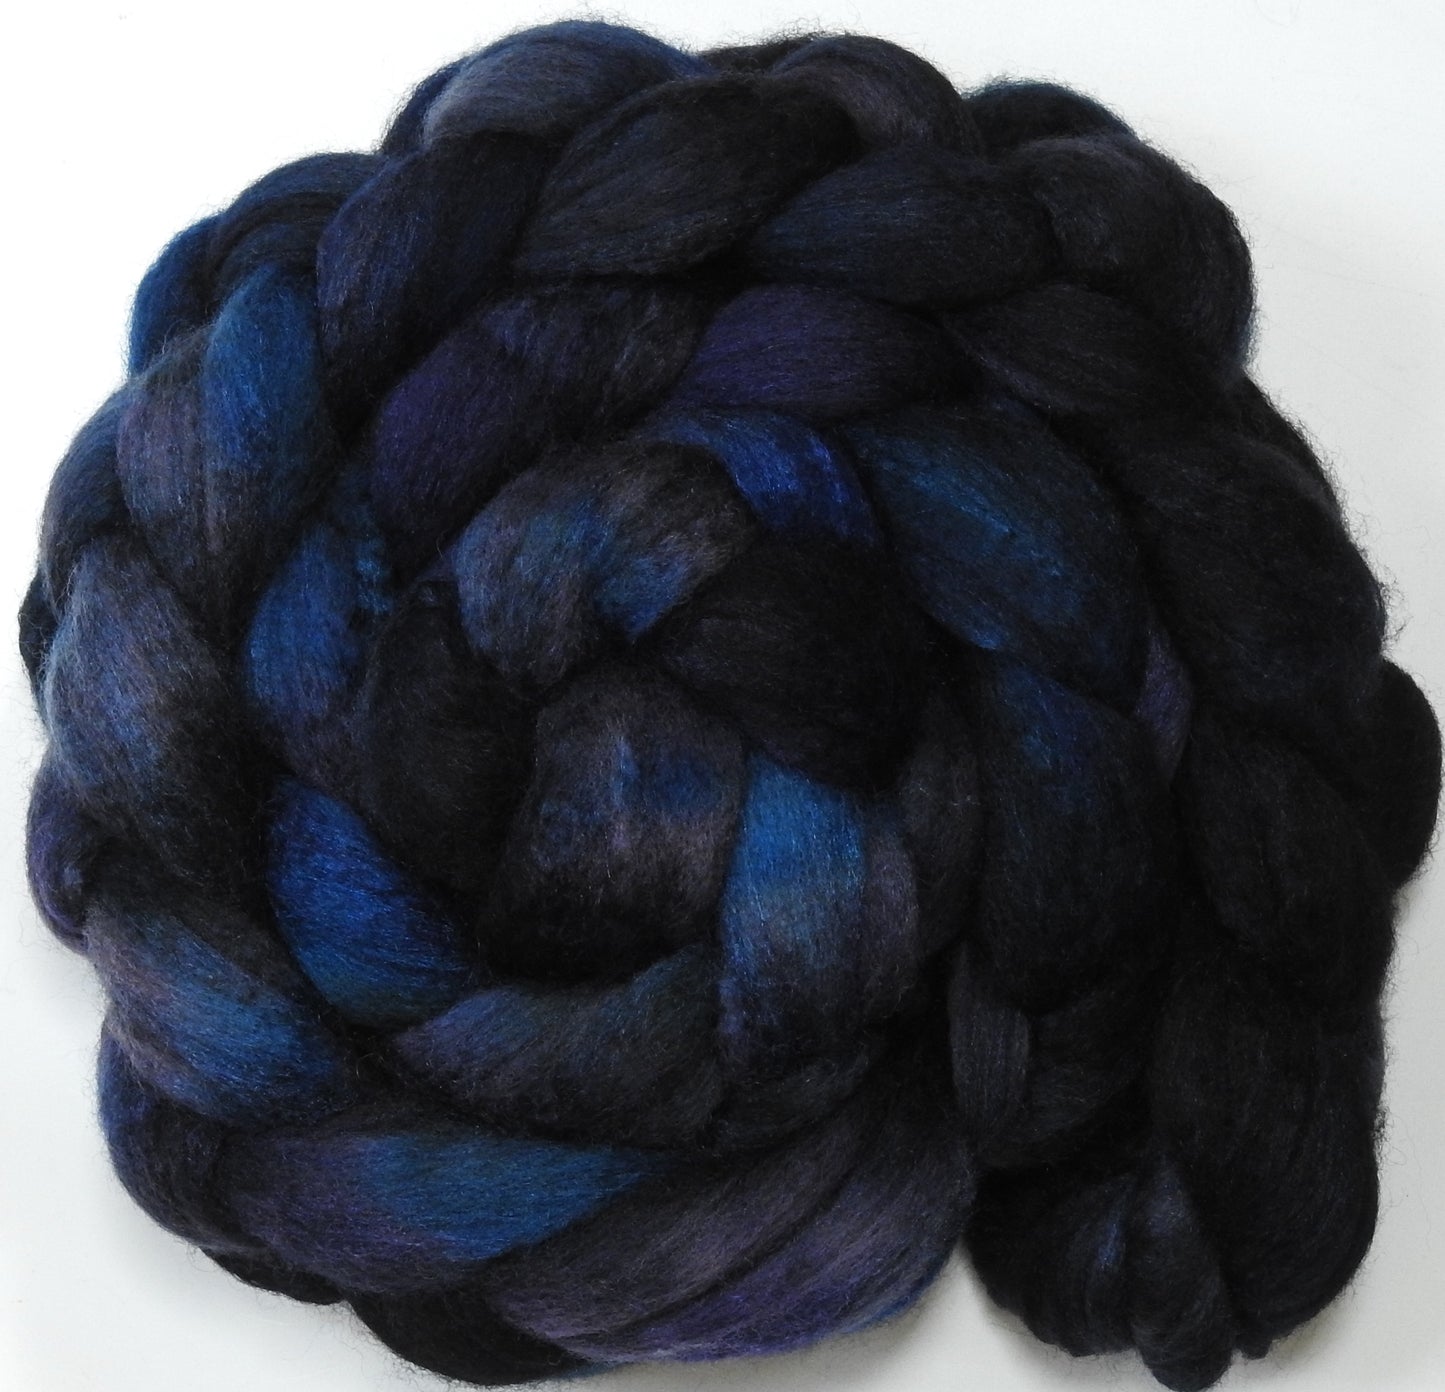 Raven (5.3 oz) - Blue-faced Leicester/ Tussah Silk (75/25)